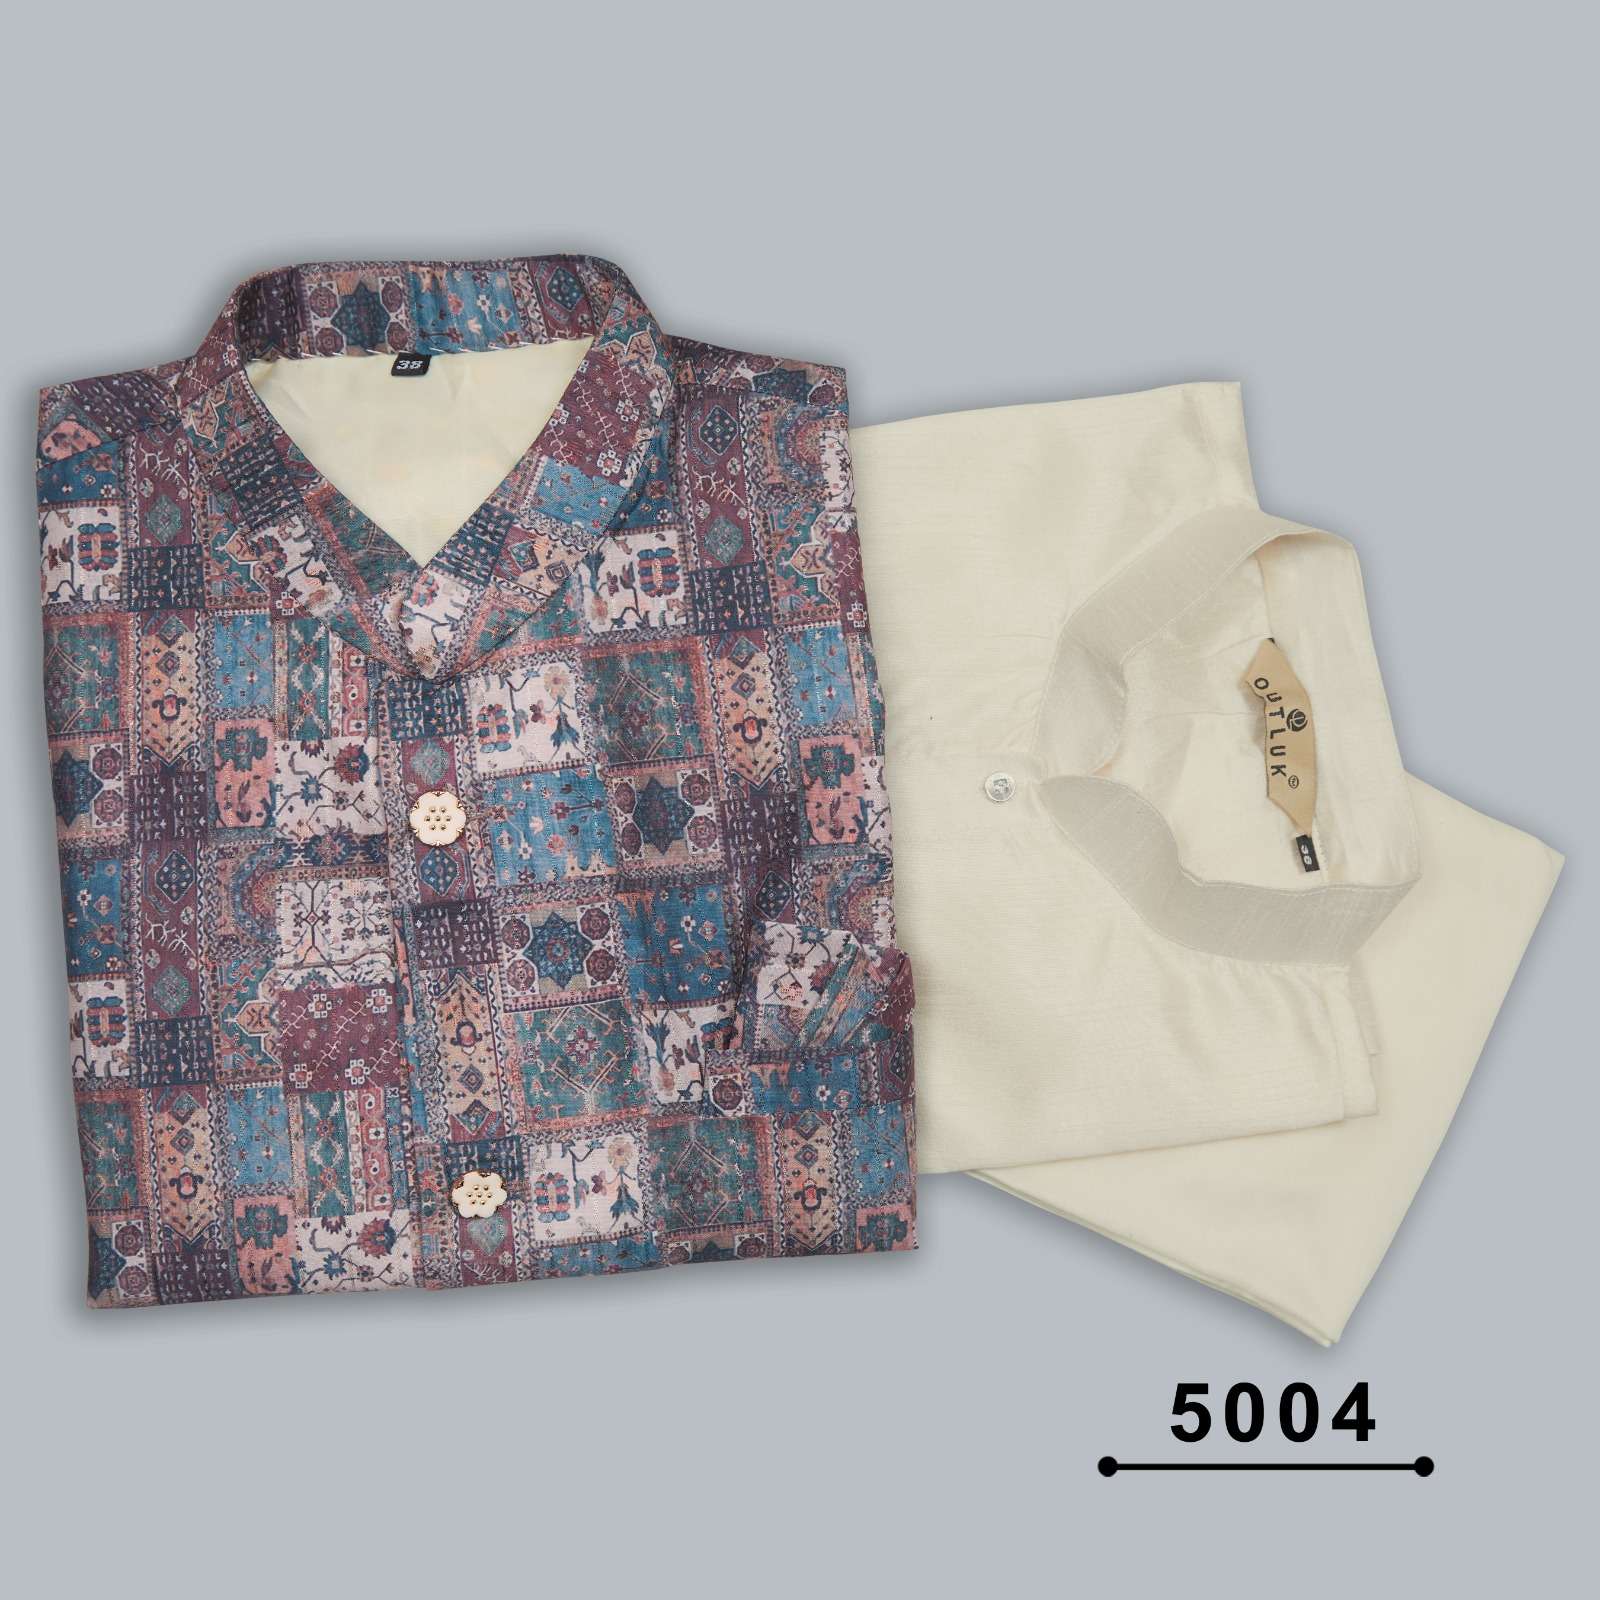 outluk wedding collection vol-5 5001-5006 series cotton work mens kurta with pajama set collection at wholesale price